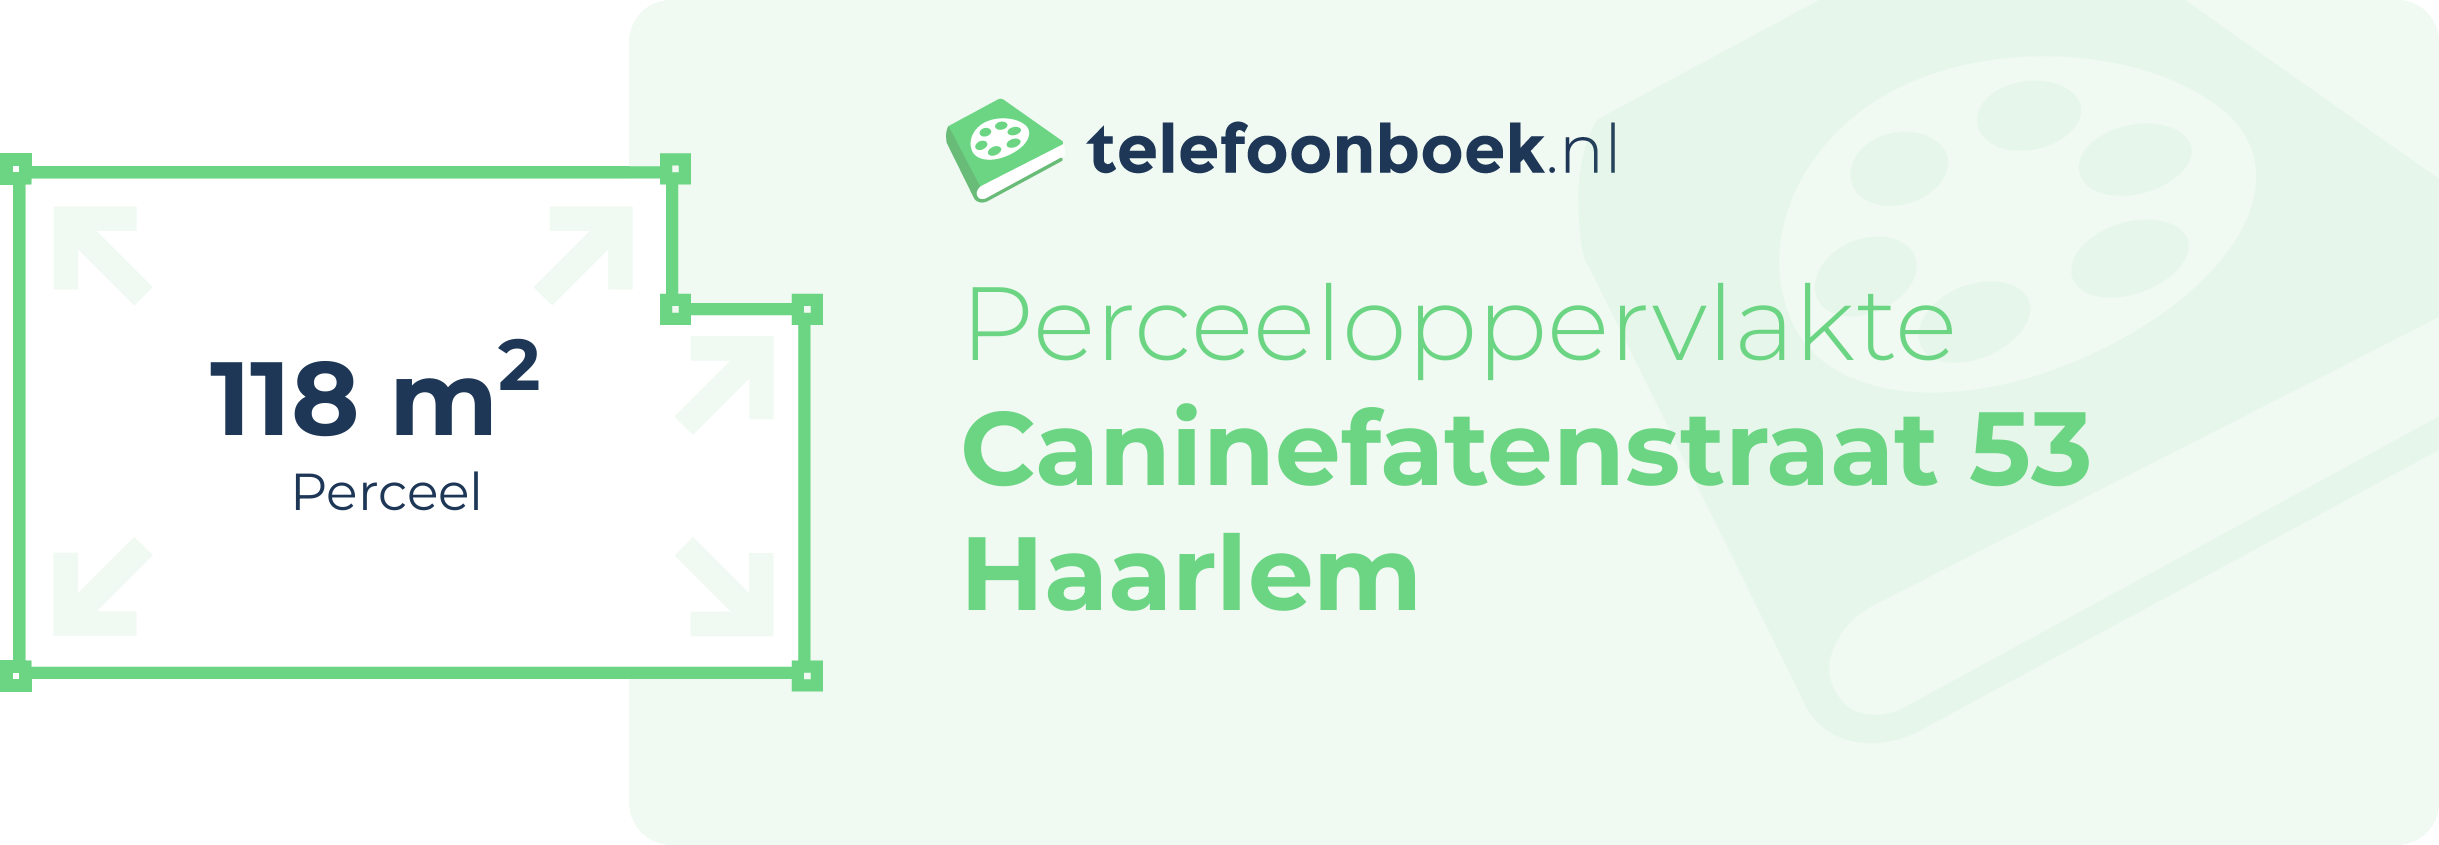 Perceeloppervlakte Caninefatenstraat 53 Haarlem